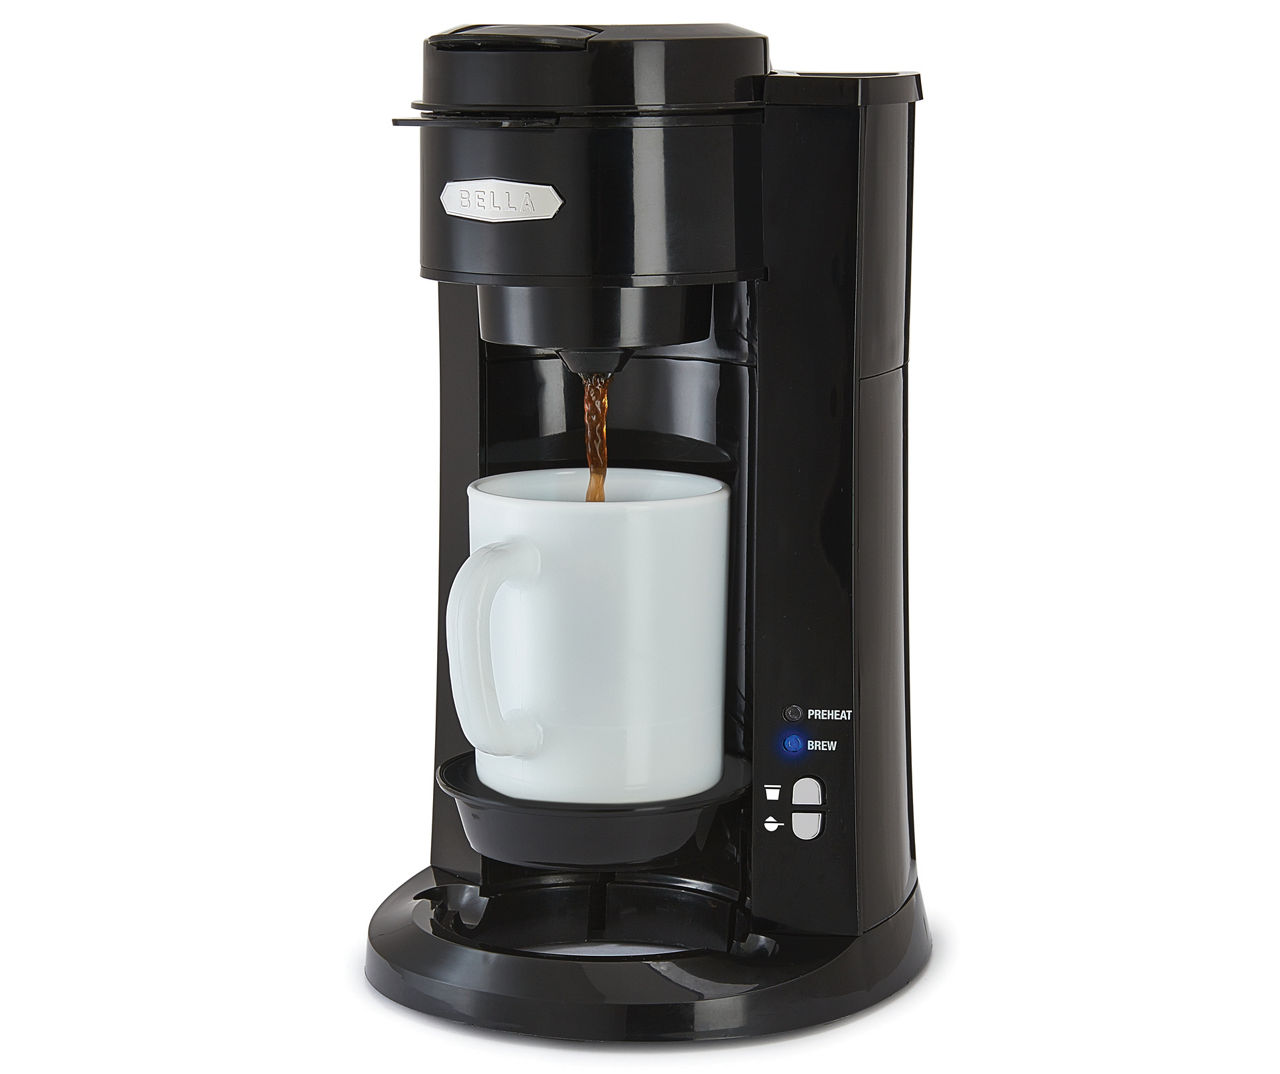 Best Buy: Bella DualBrew Single-Serve Coffeemaker Black/Silver BLA14392